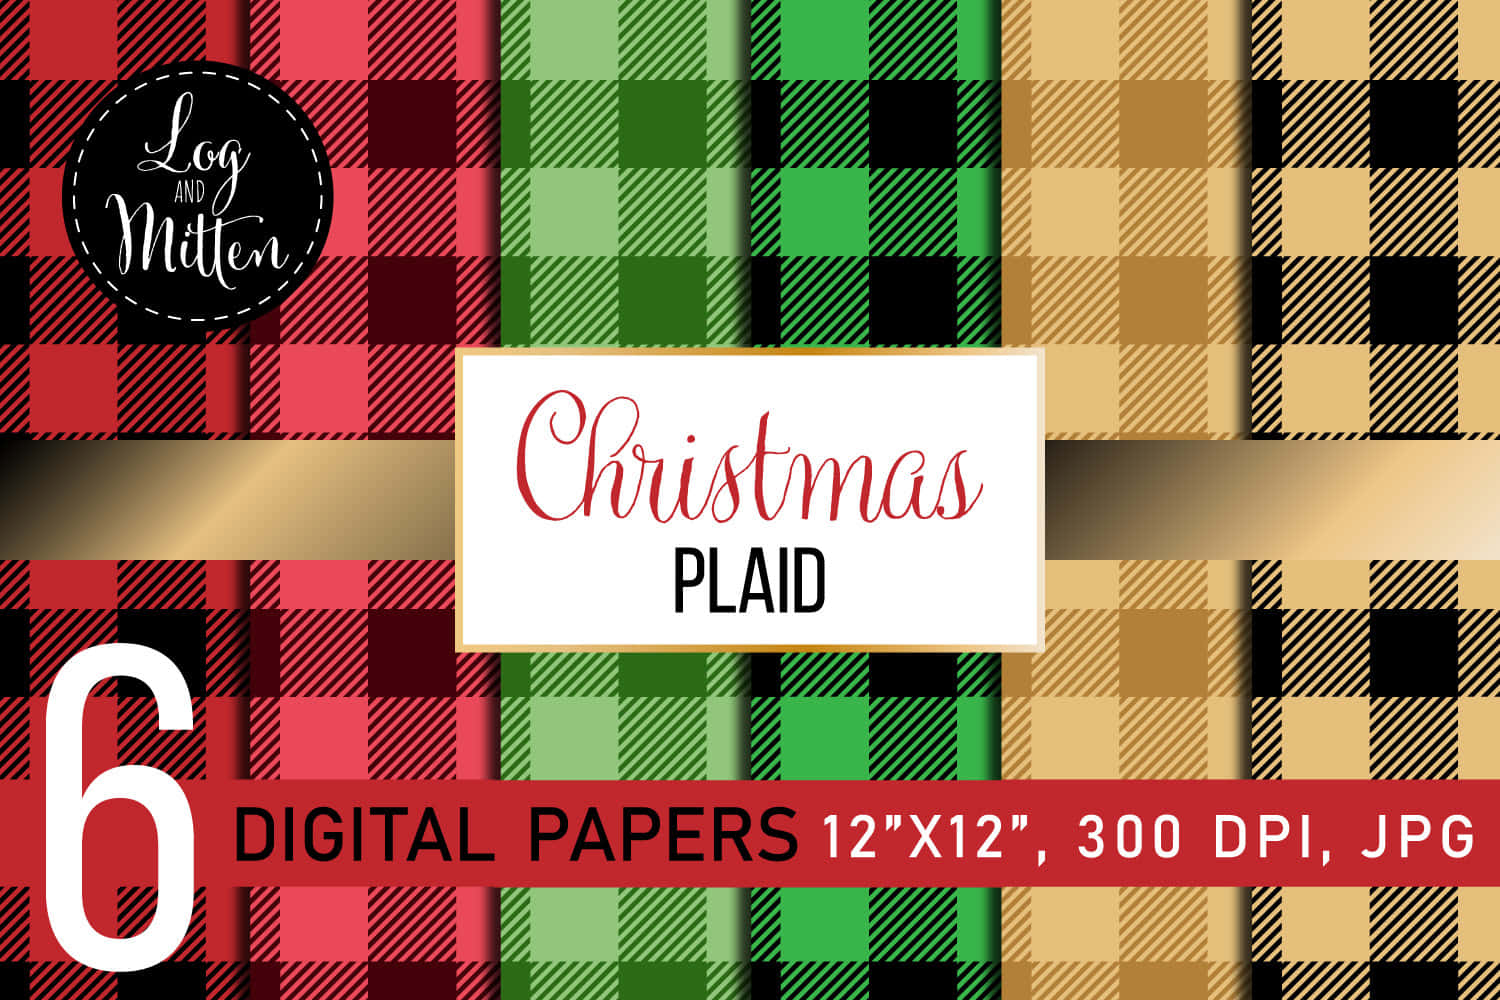 Christmas Plaid Digital Papers